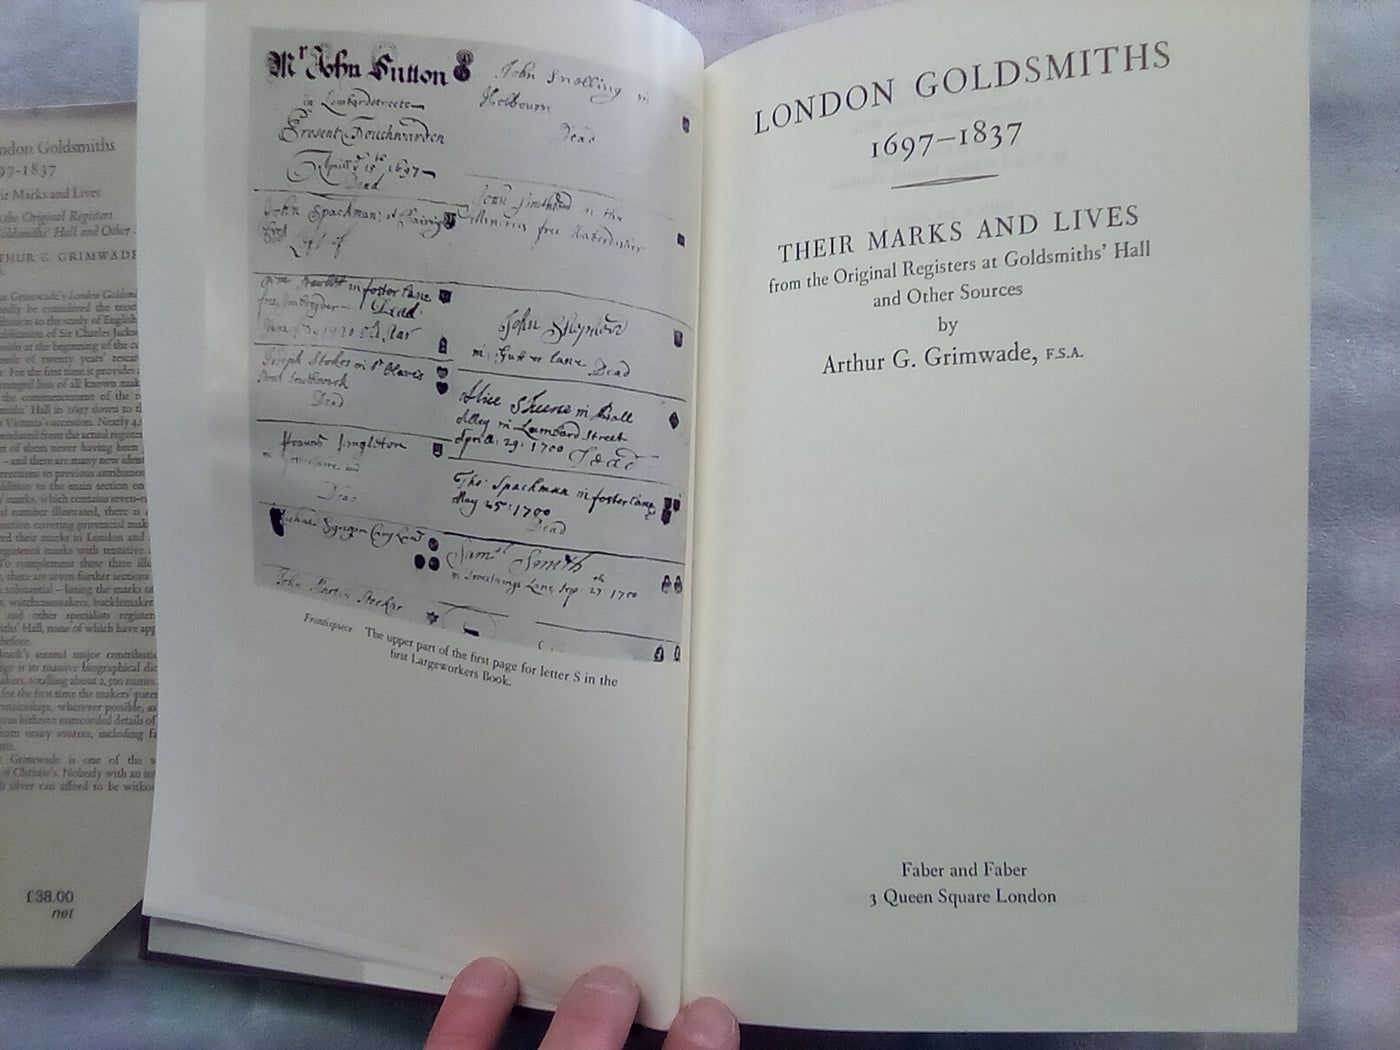 London Goldsmiths 1697-1837 Their Marks & Lives by Arthur G. Grimwade